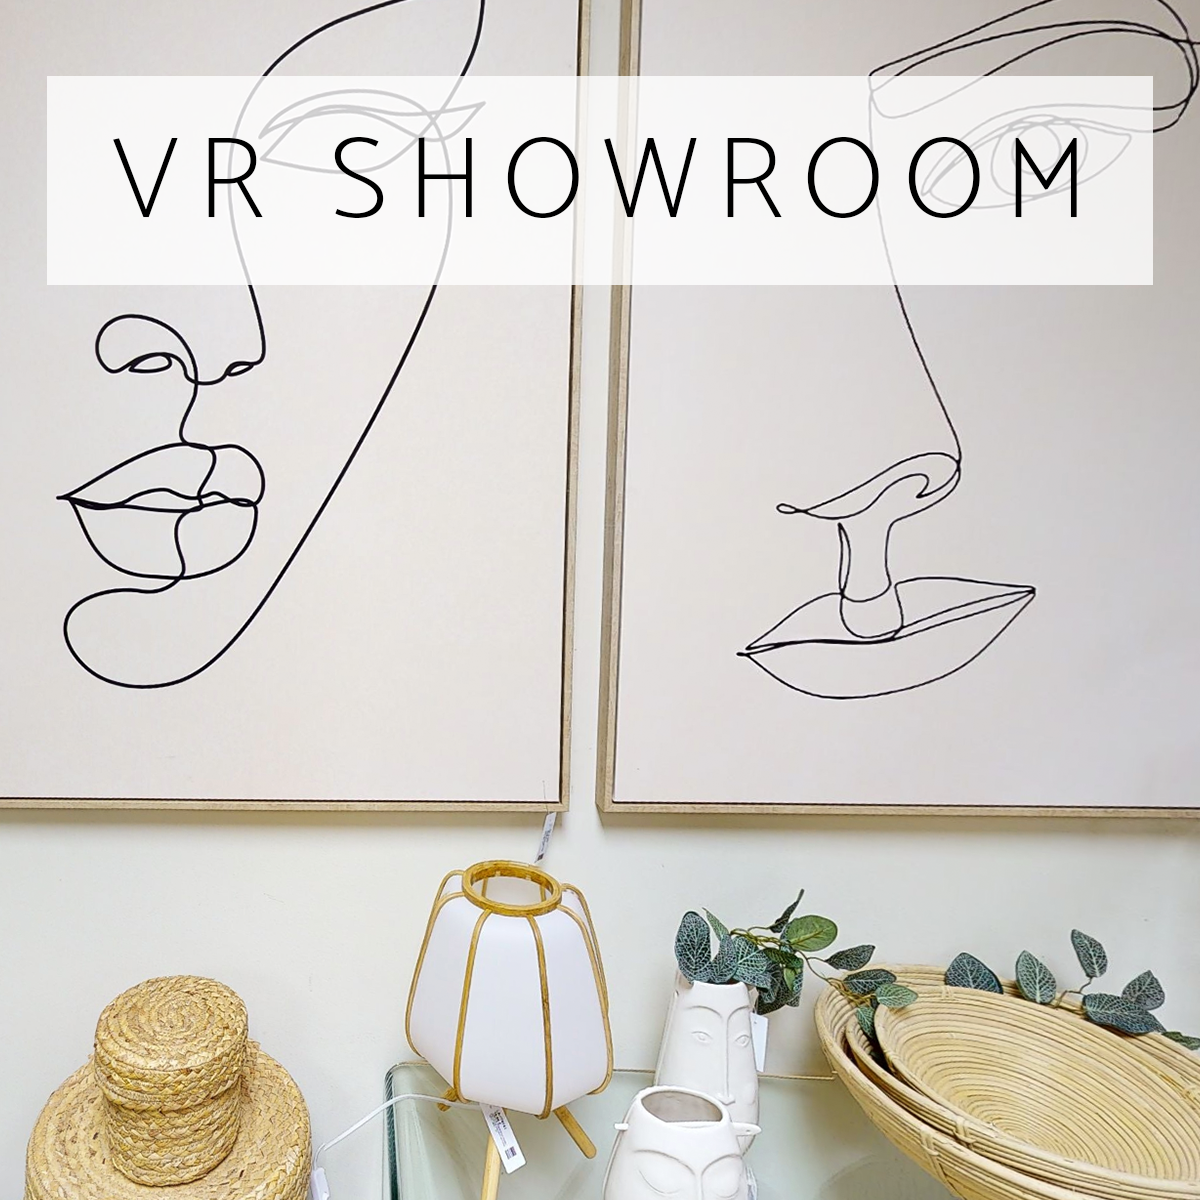 VR SHOWROOM